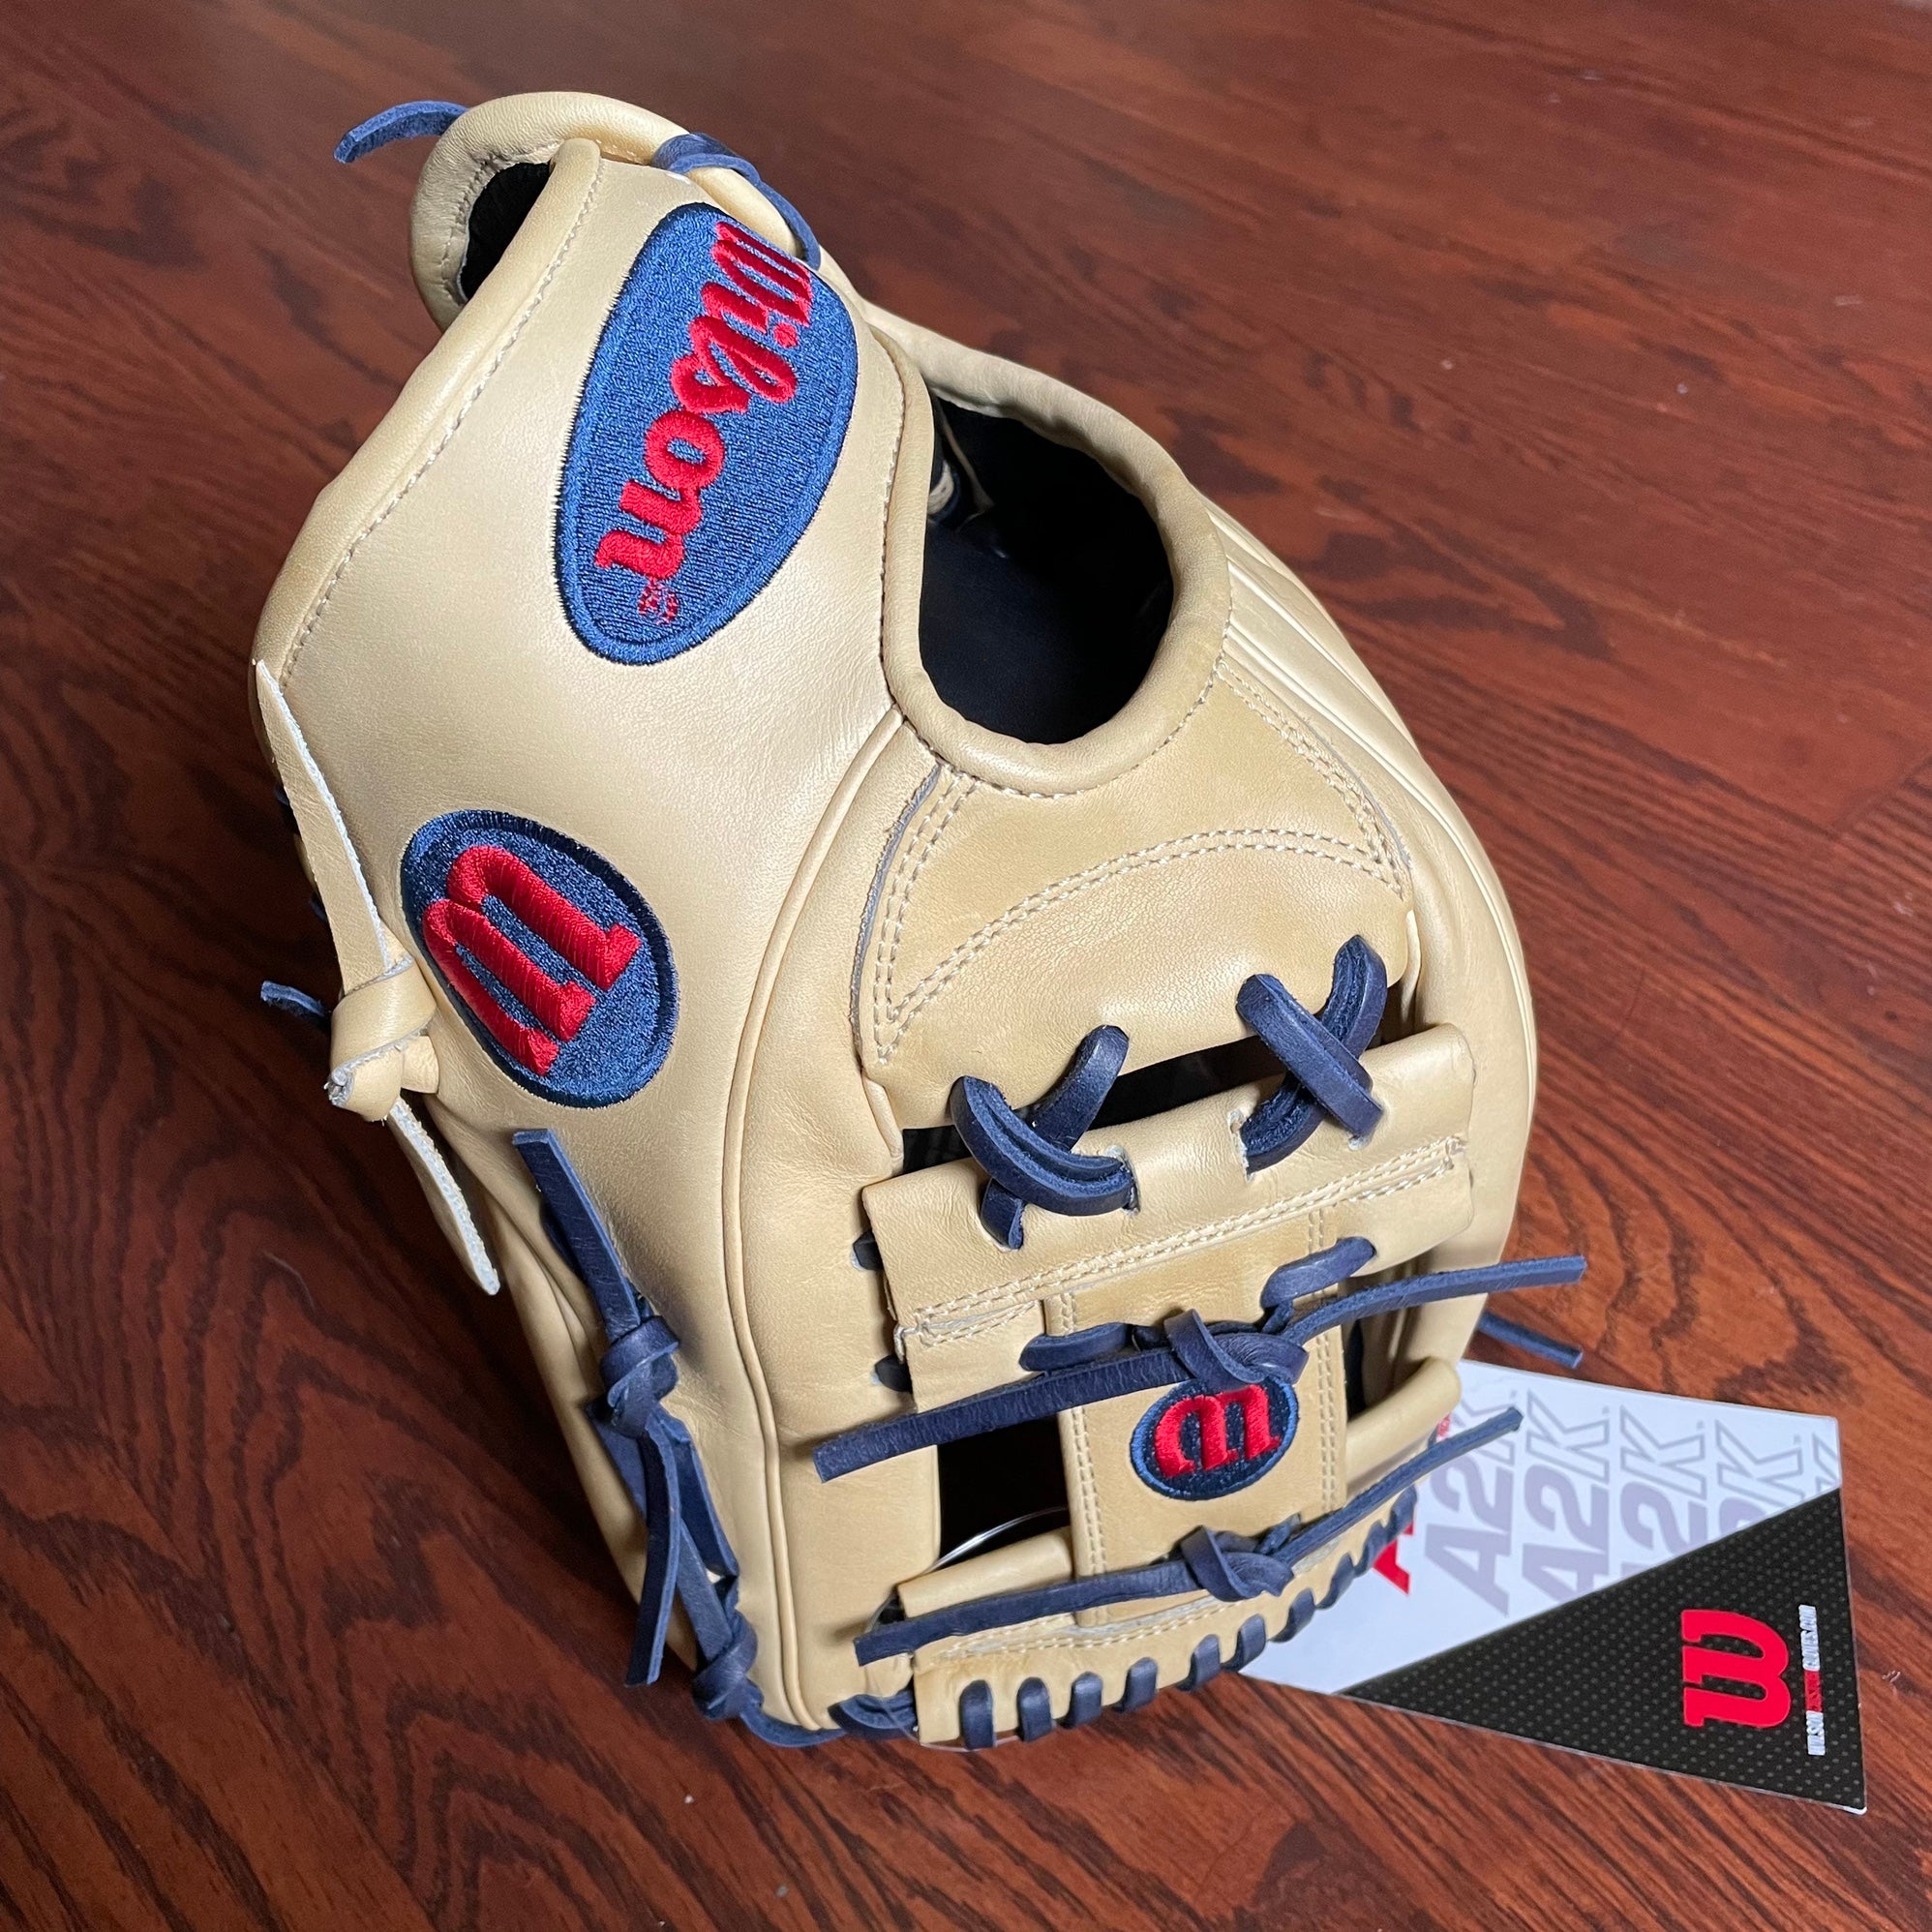 🚨 Dansby Swanson Custom Glove - Wilson Baseball / Softball